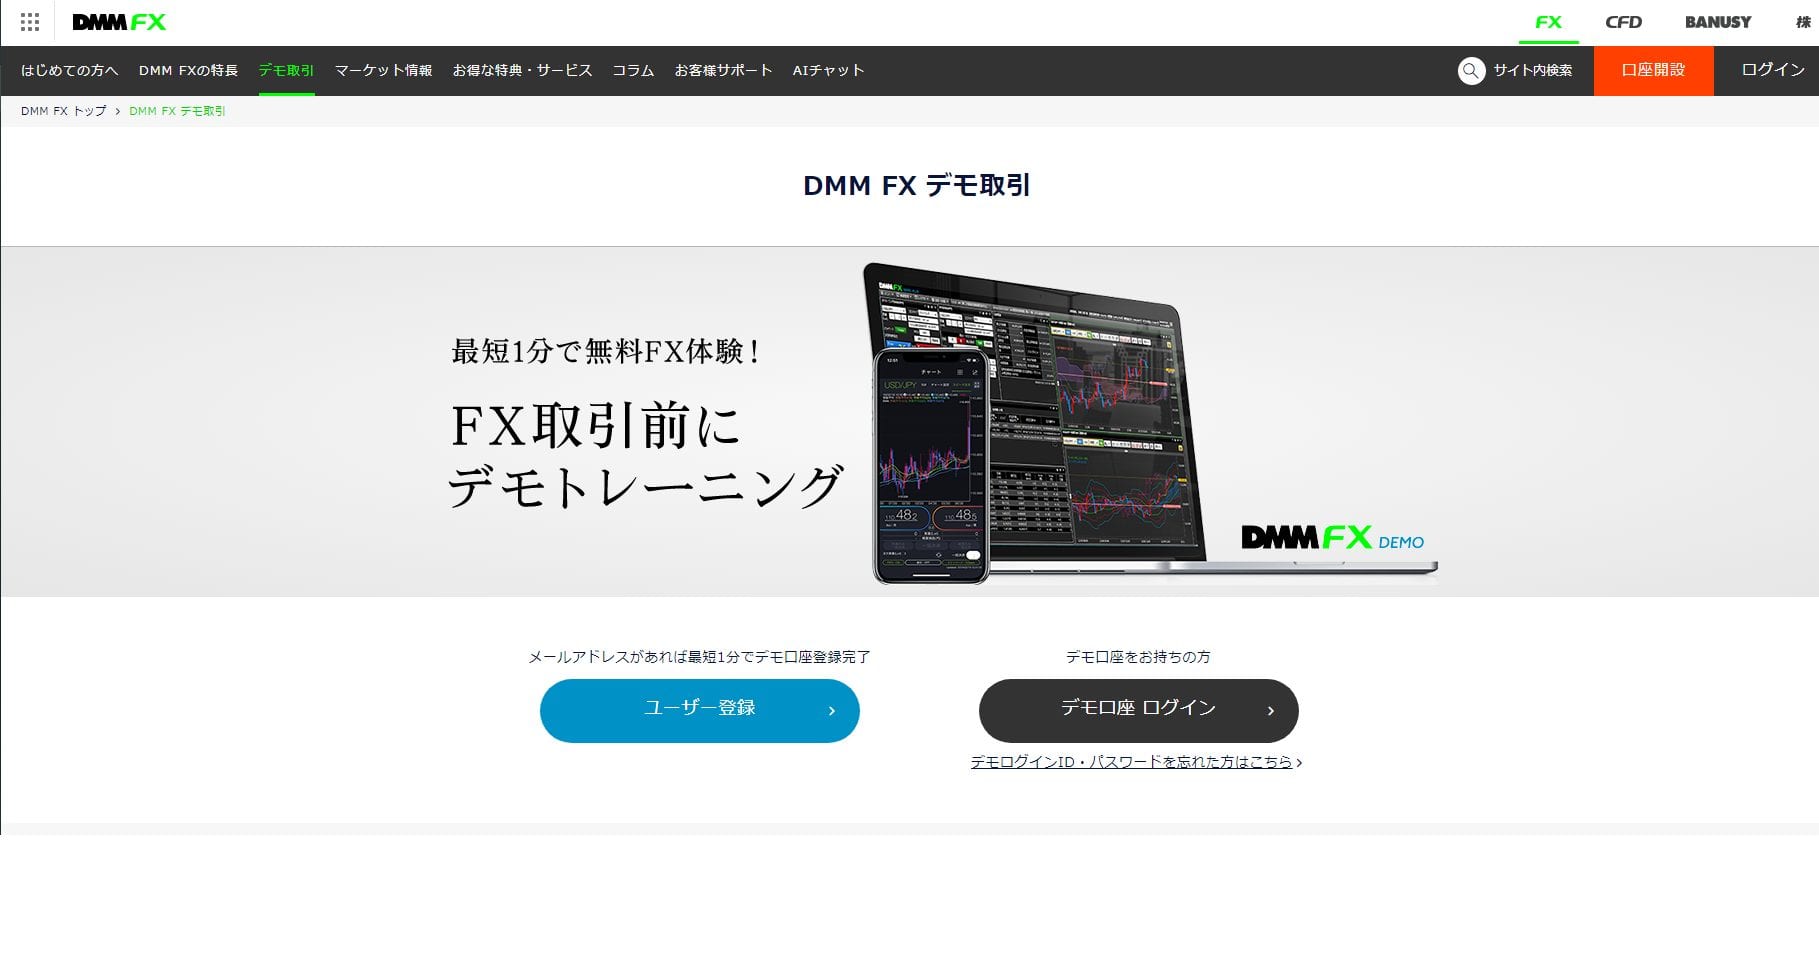 DMMFX Demo account open